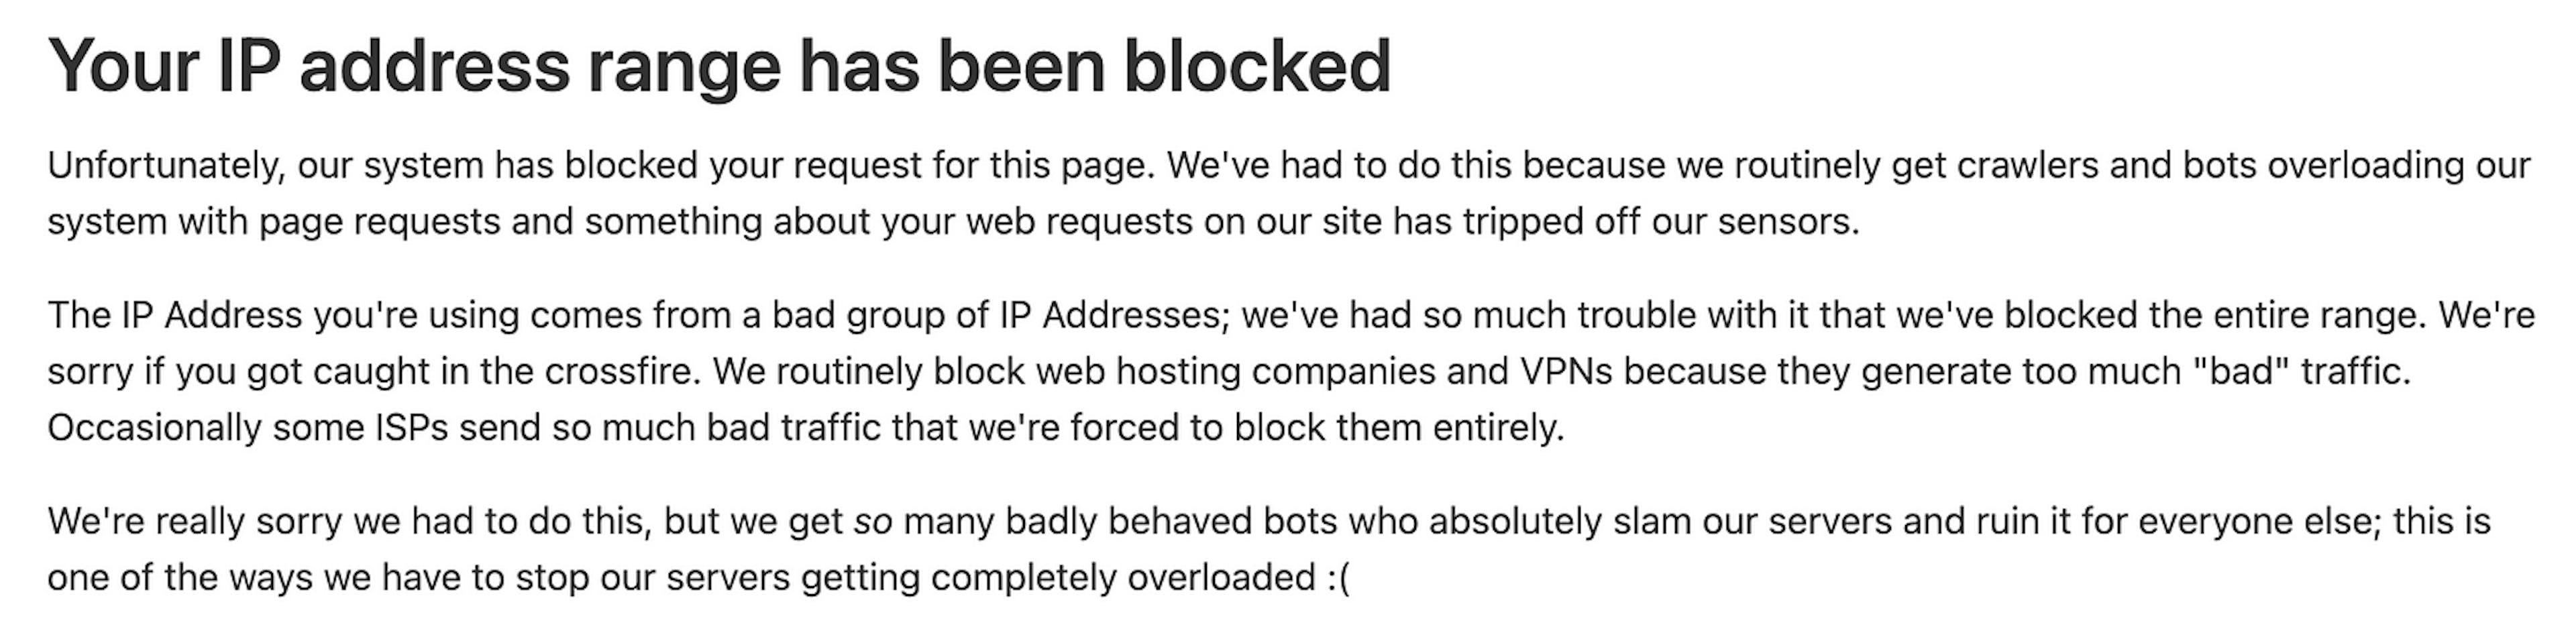 A website blocking datacenter IP addresses. Image by Author.